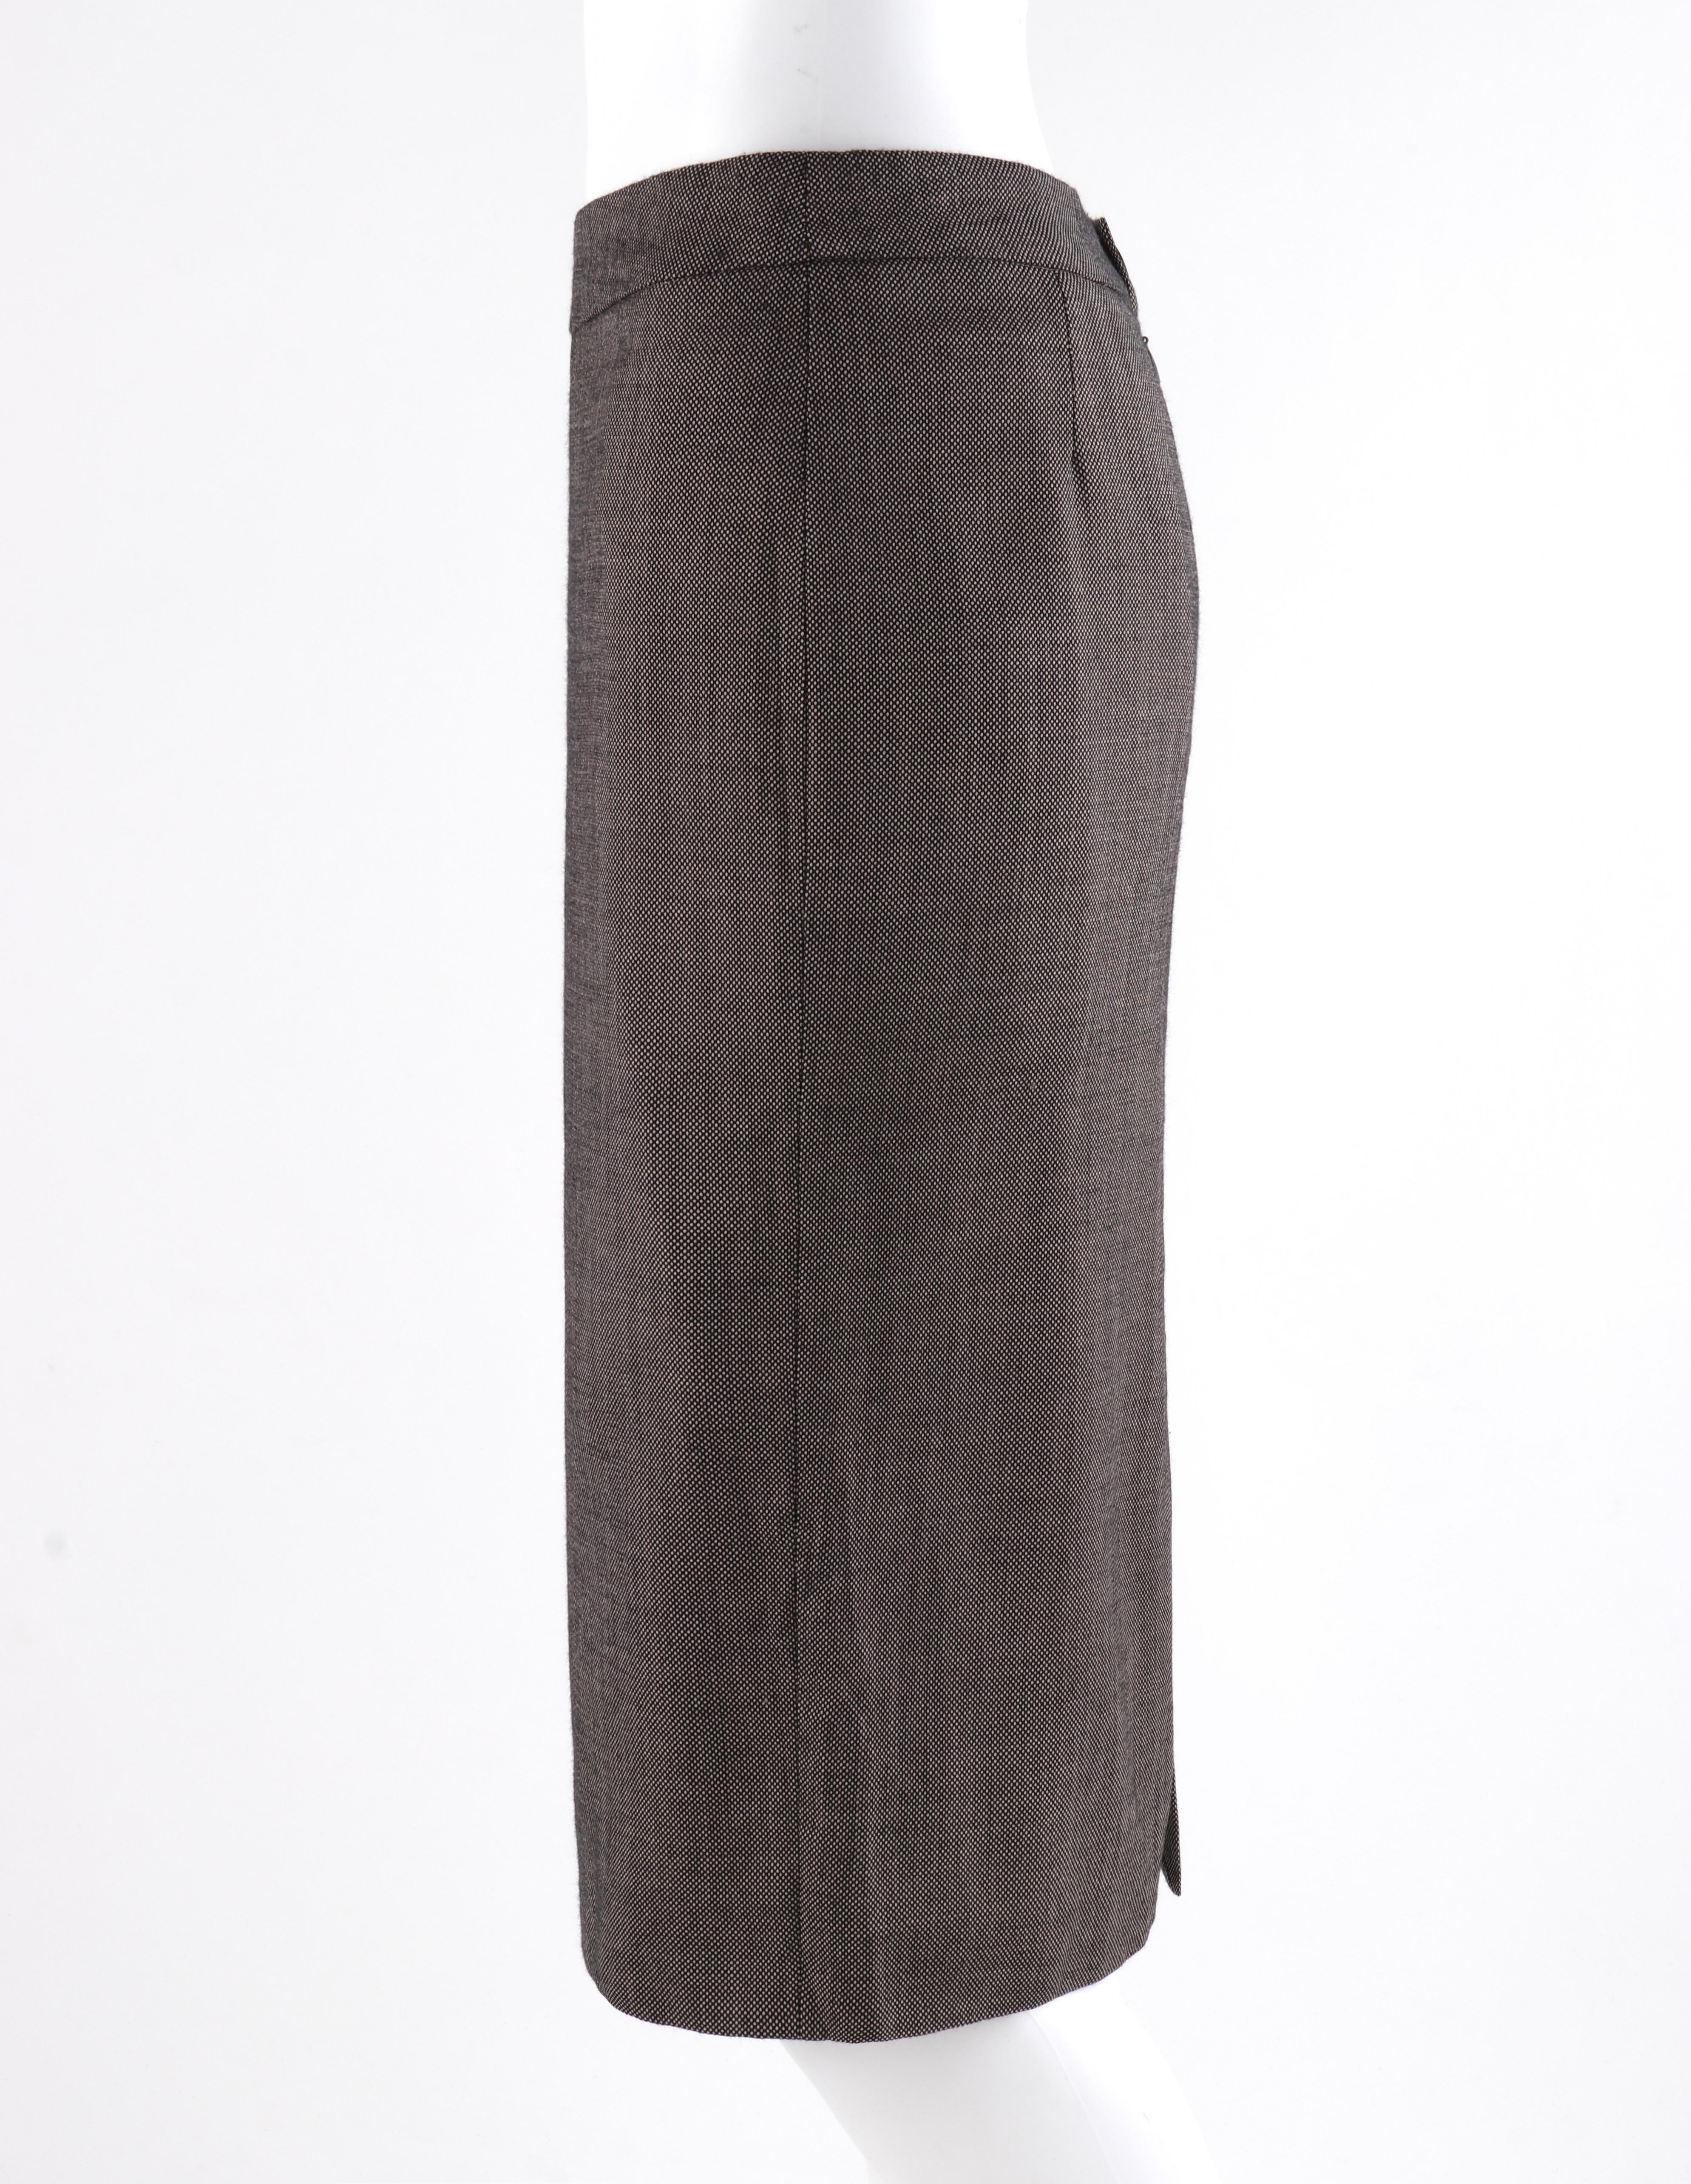  ALEXANDER McQUEEN A/W 1998 “Joan” 2 pc. Removable Collar Blazer Skirt Suit Set For Sale 4